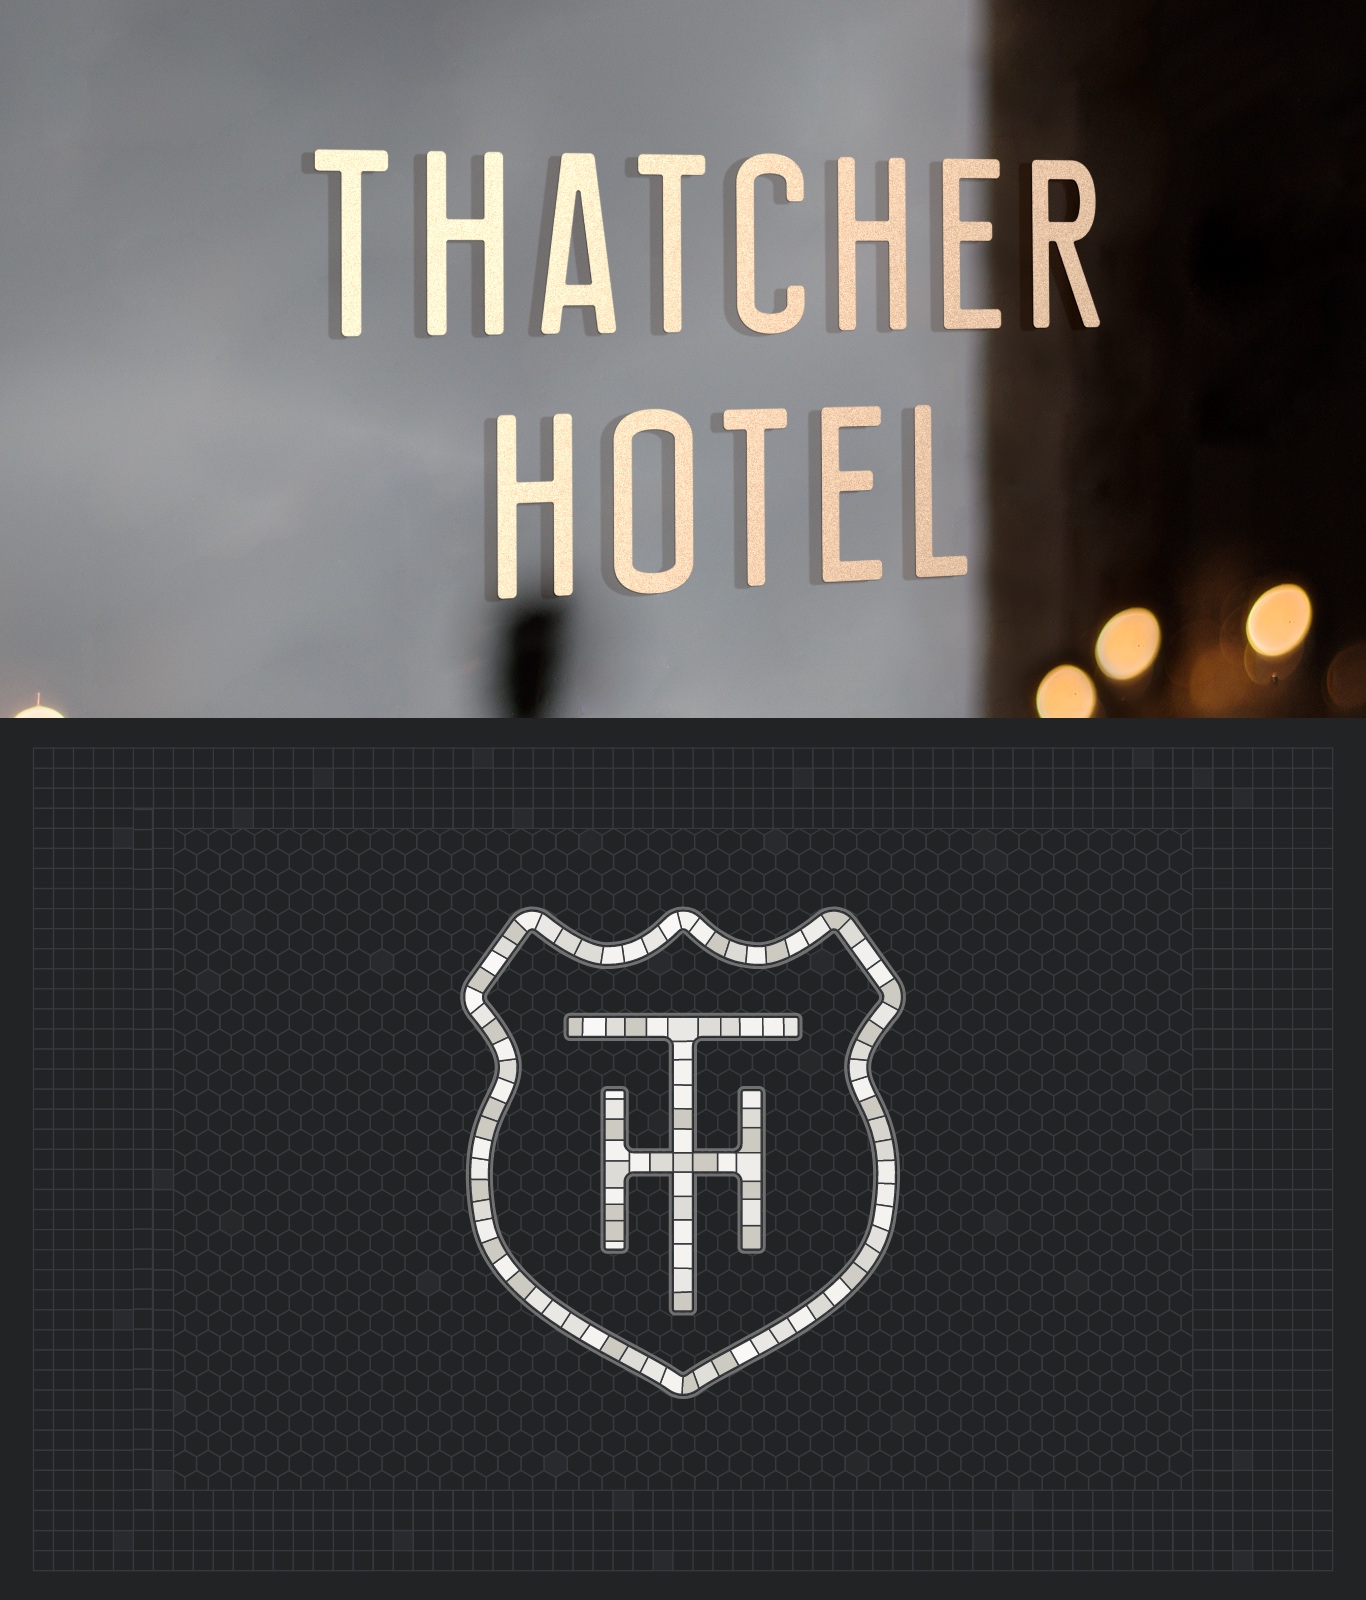 Thatcher Hotel signage